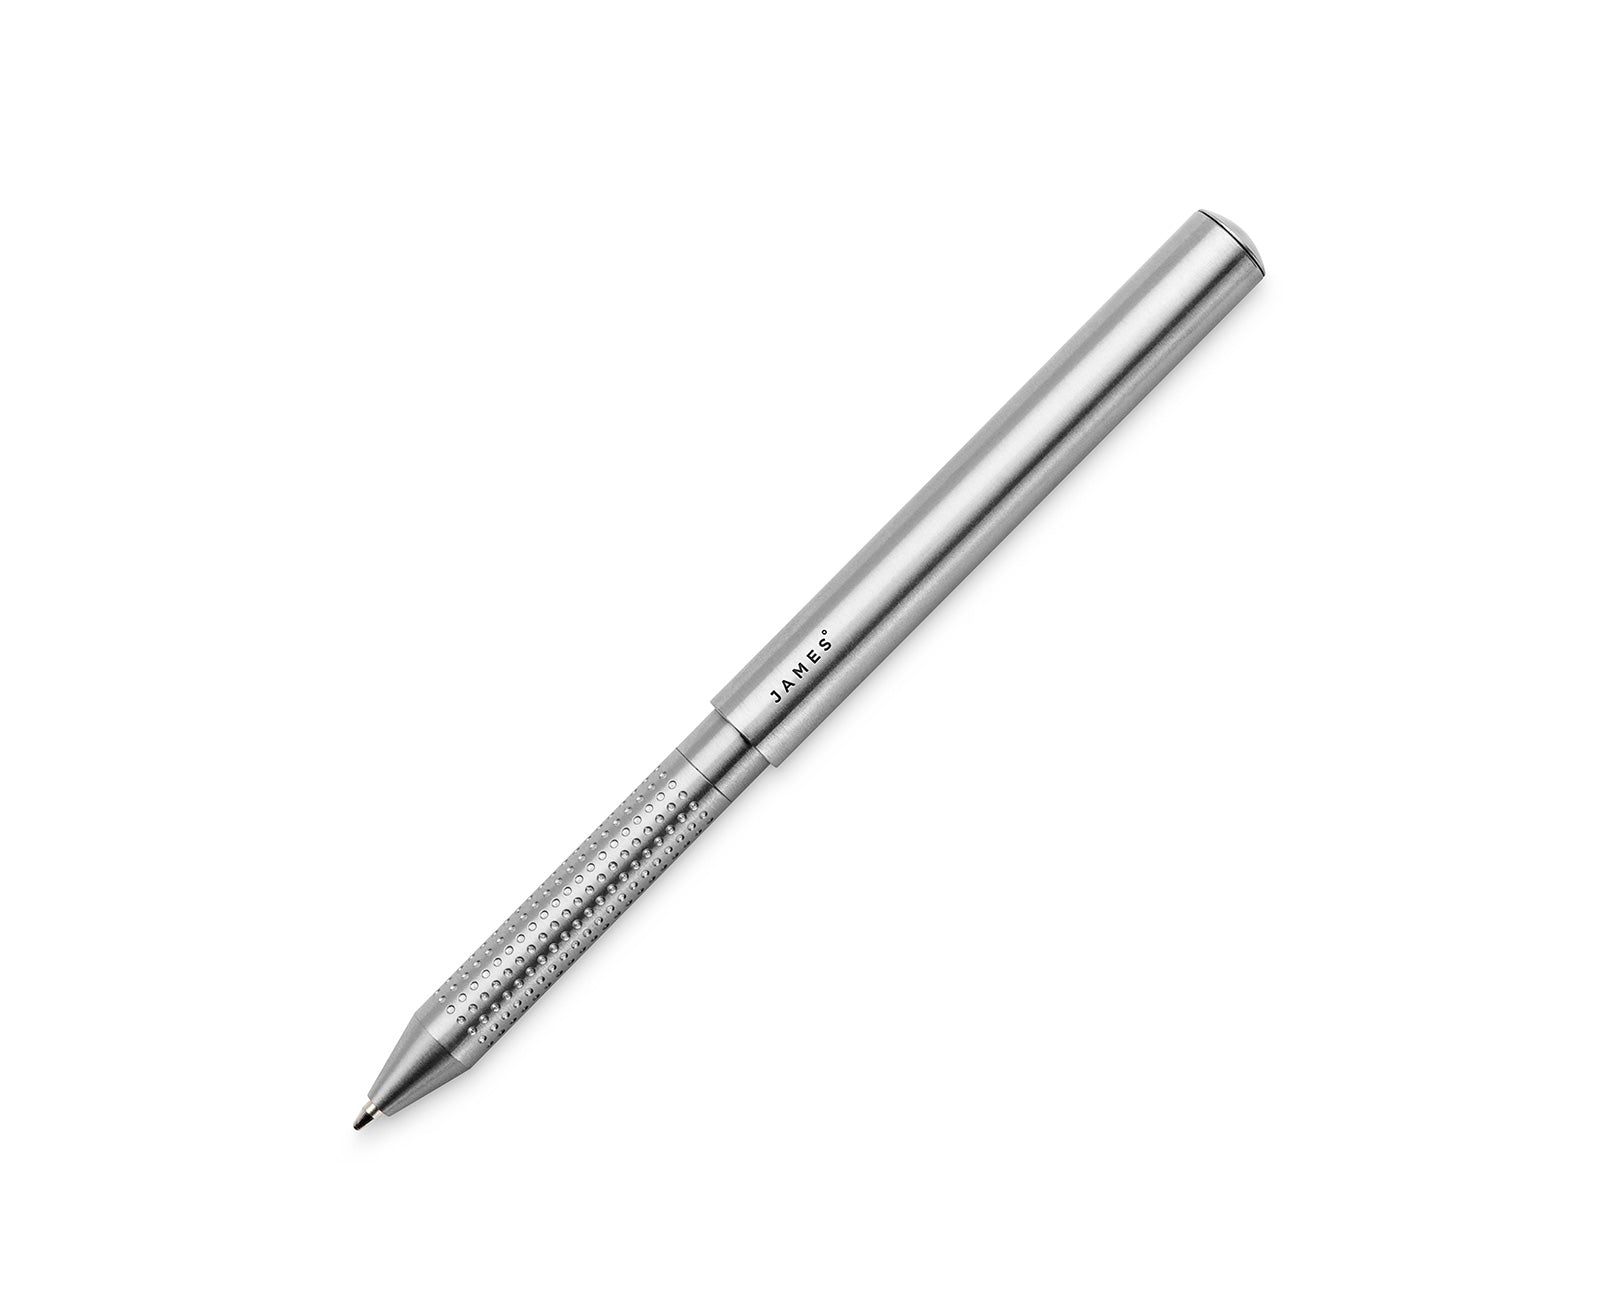 The Stillwell Pen James Brand